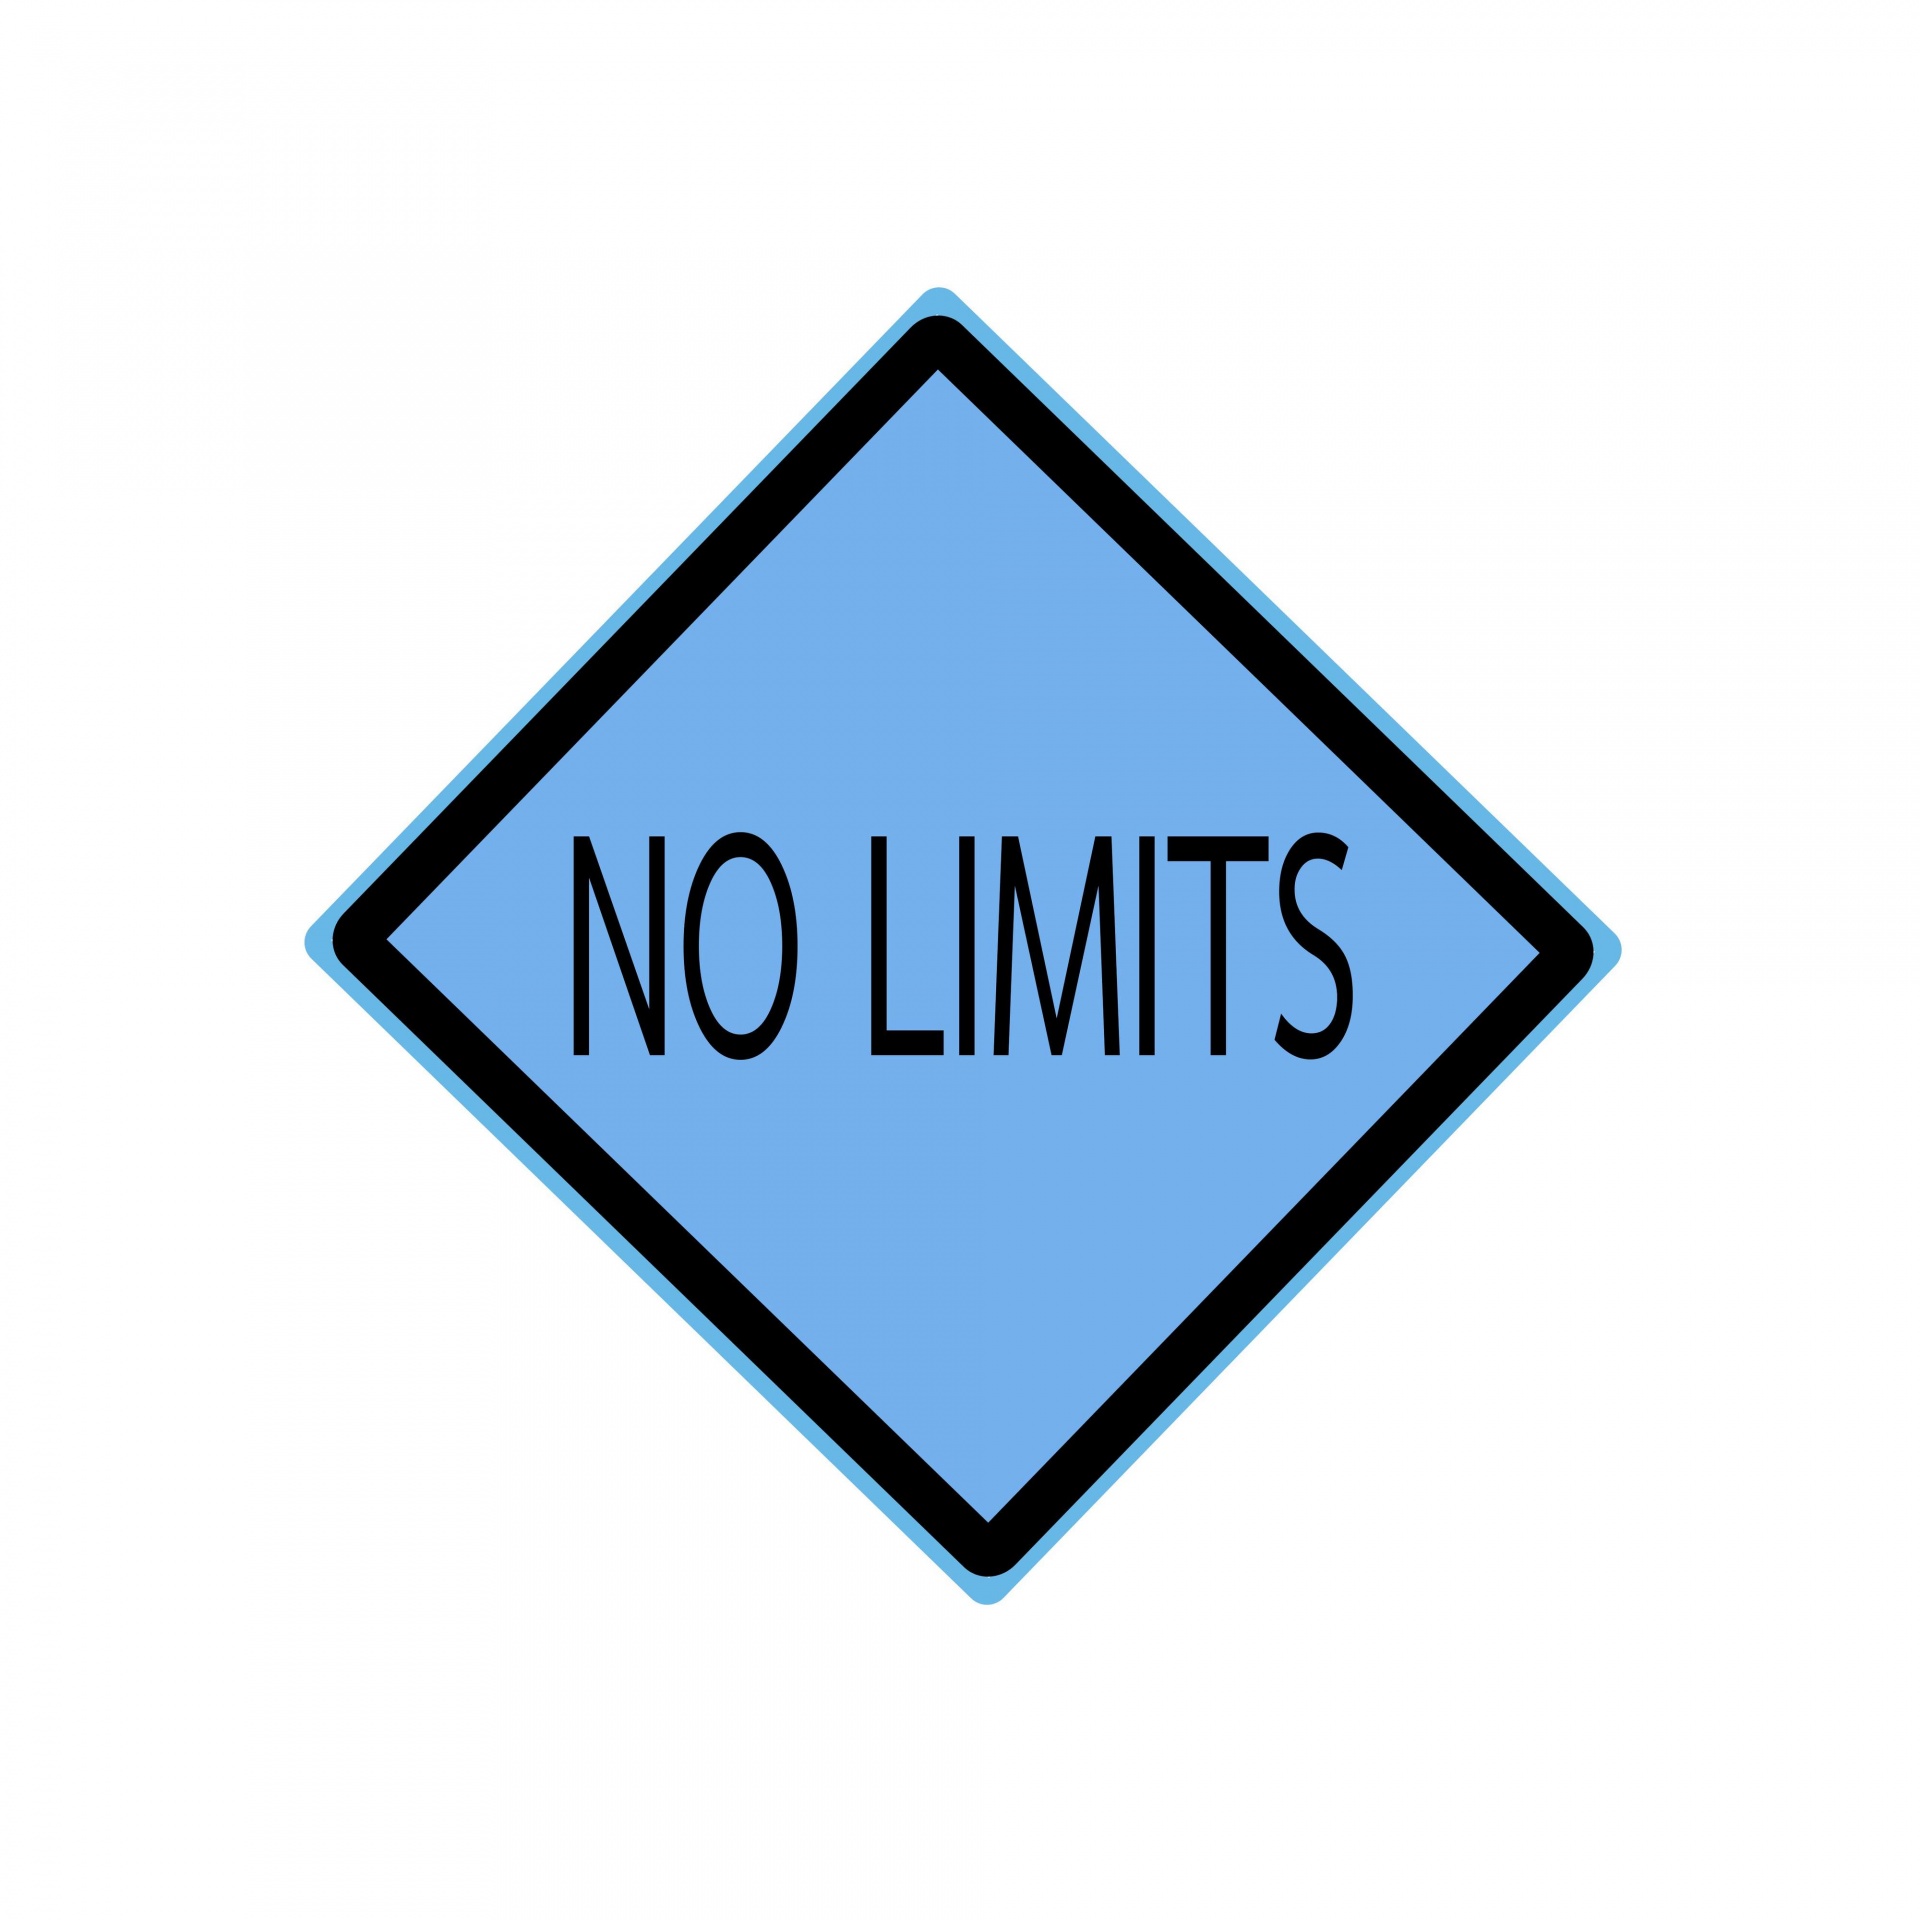 No Limits zwarte stempel tekst op blauw